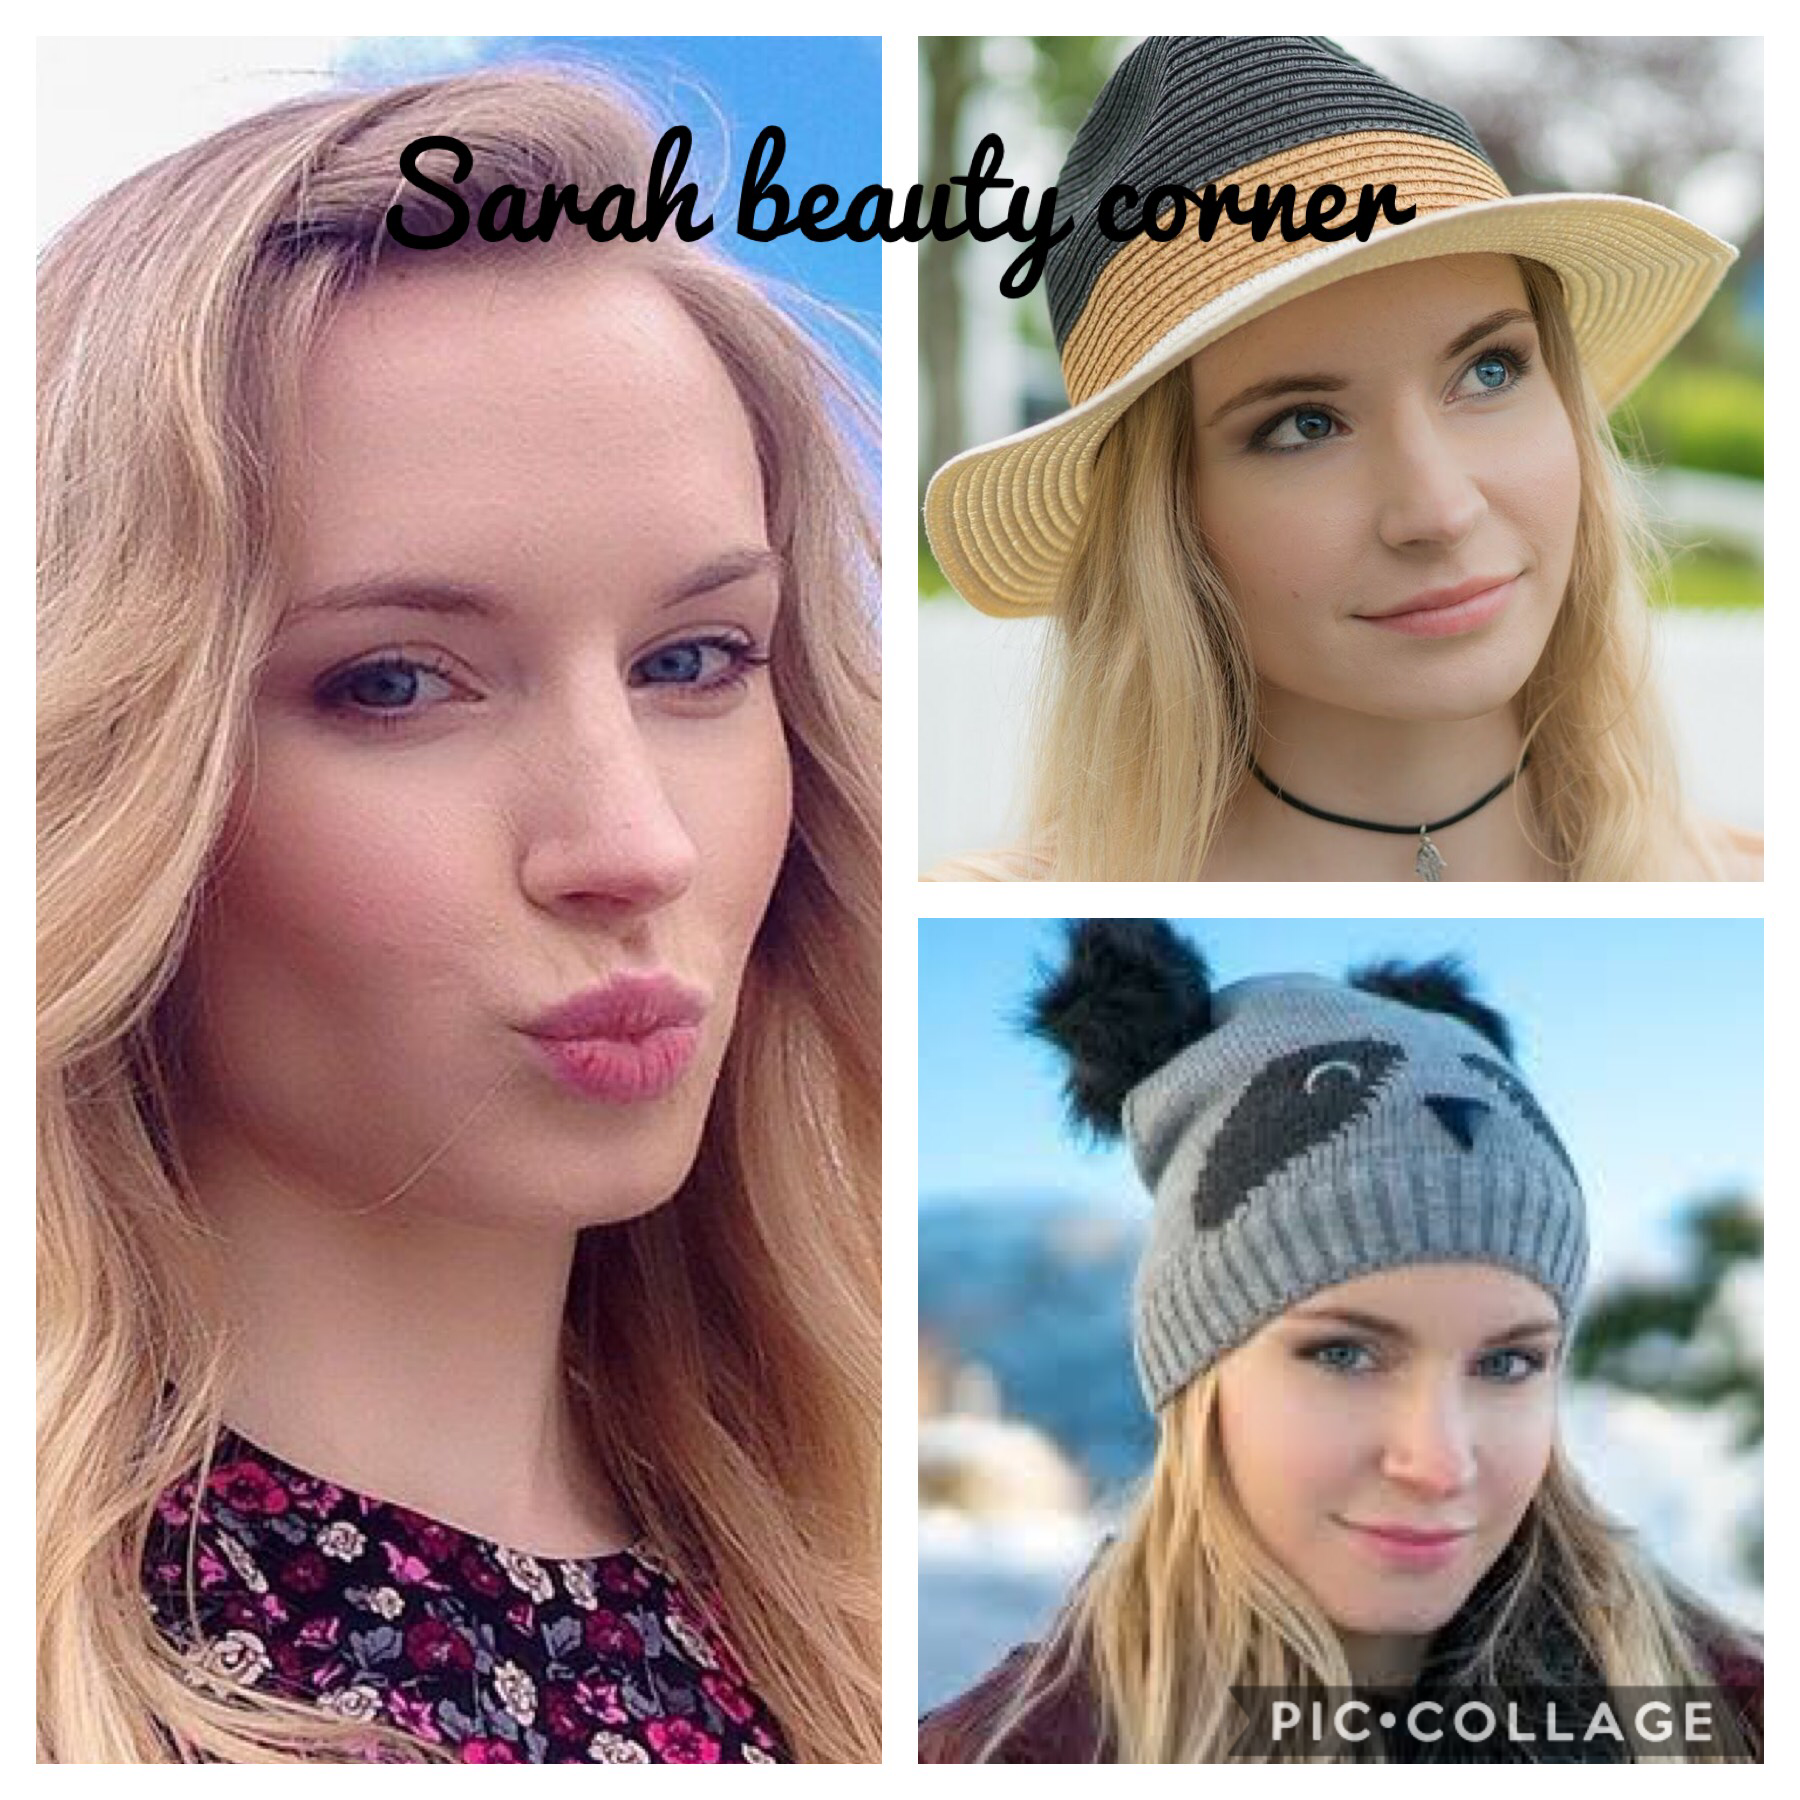 Sarah beauty corner